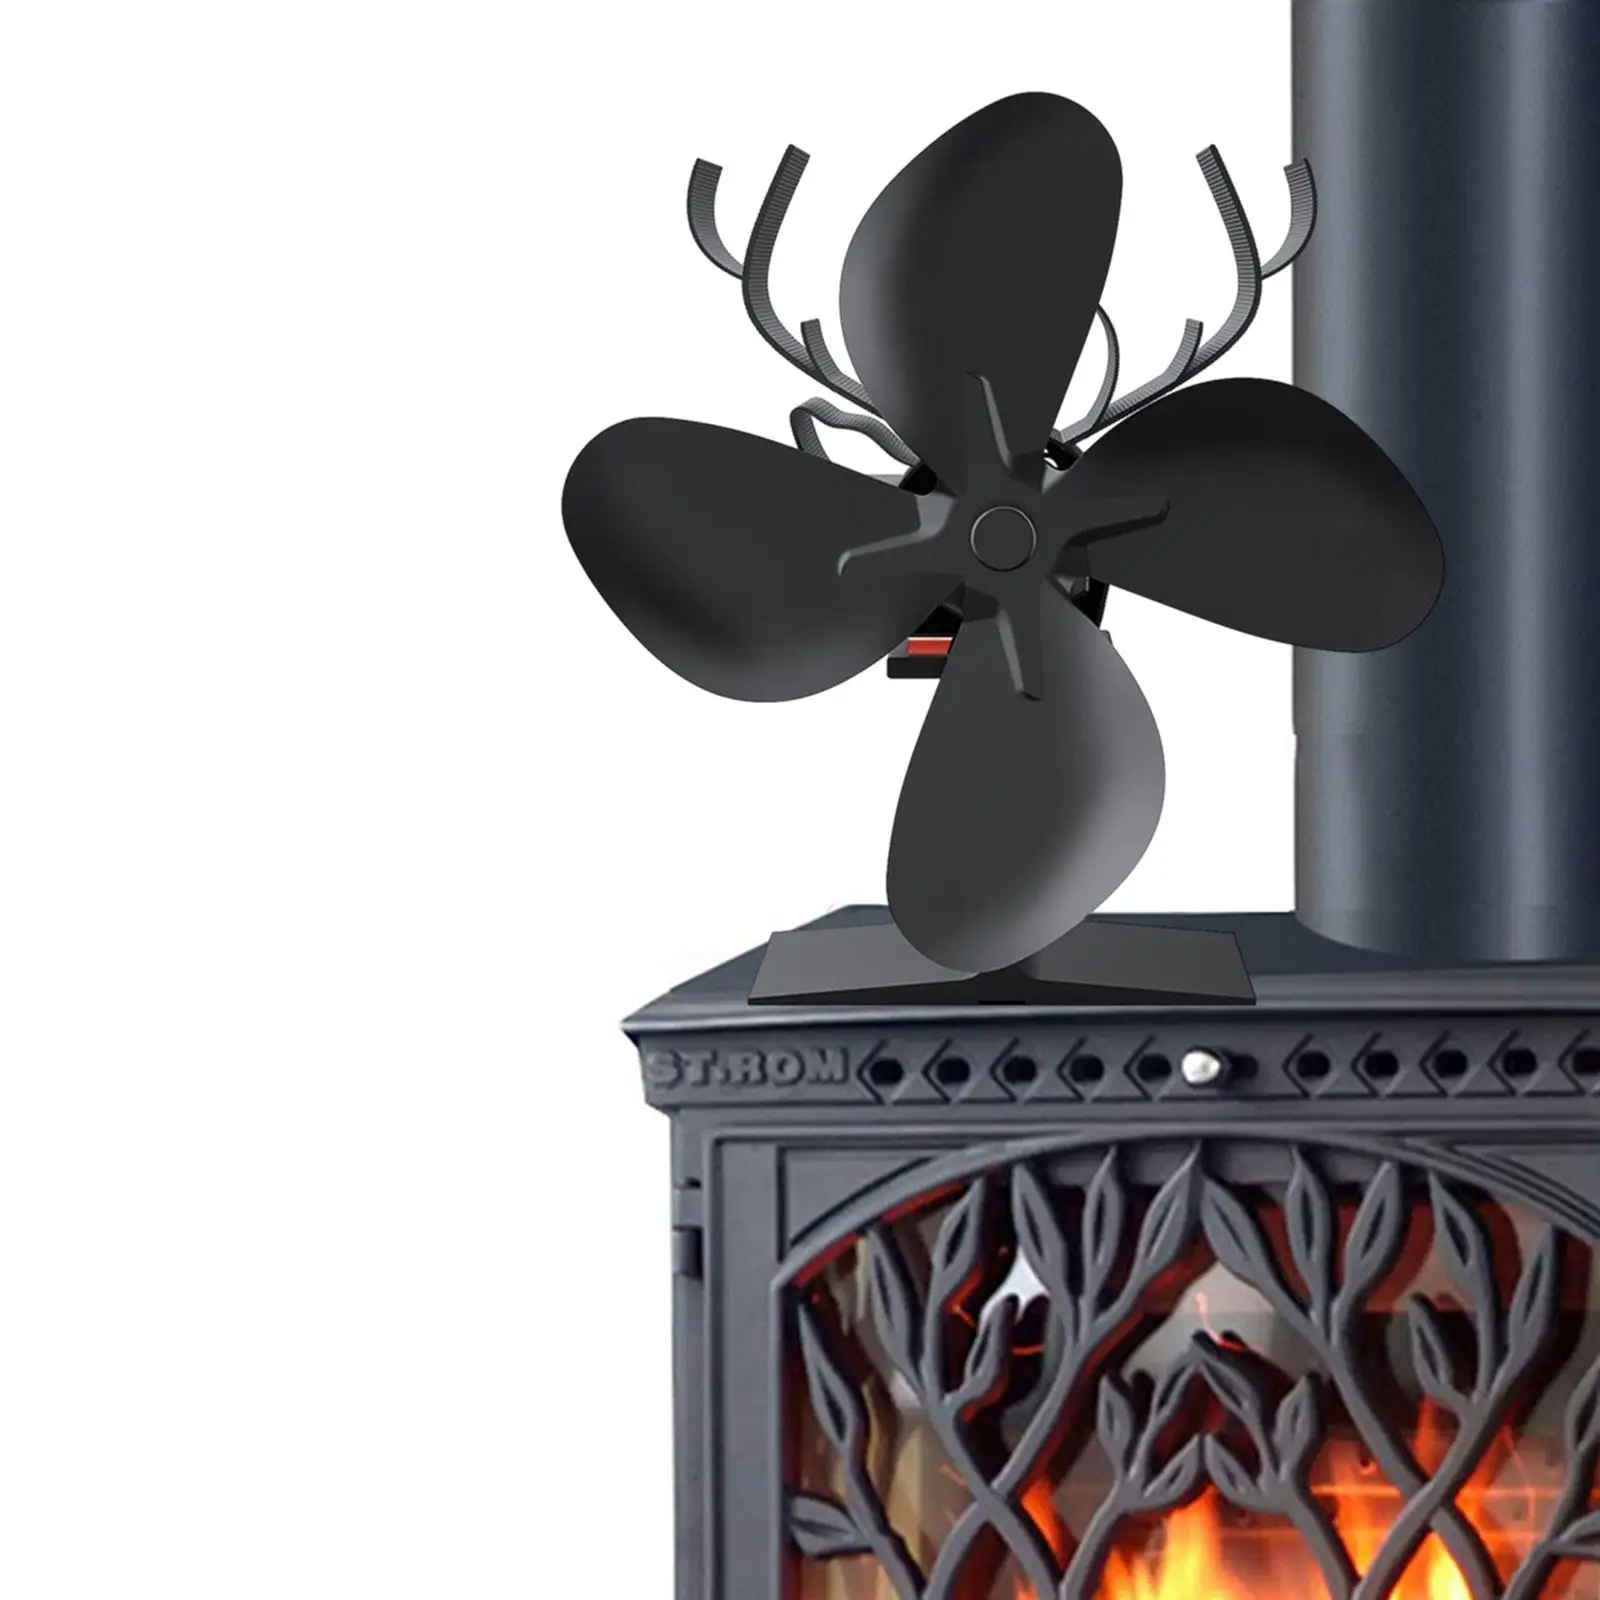 Xmas Wood Burner Fireplace Fan Logs Stove Fan Silent Running Multifunctional Working Temperature 50-350°C/122-662°F Aluminum